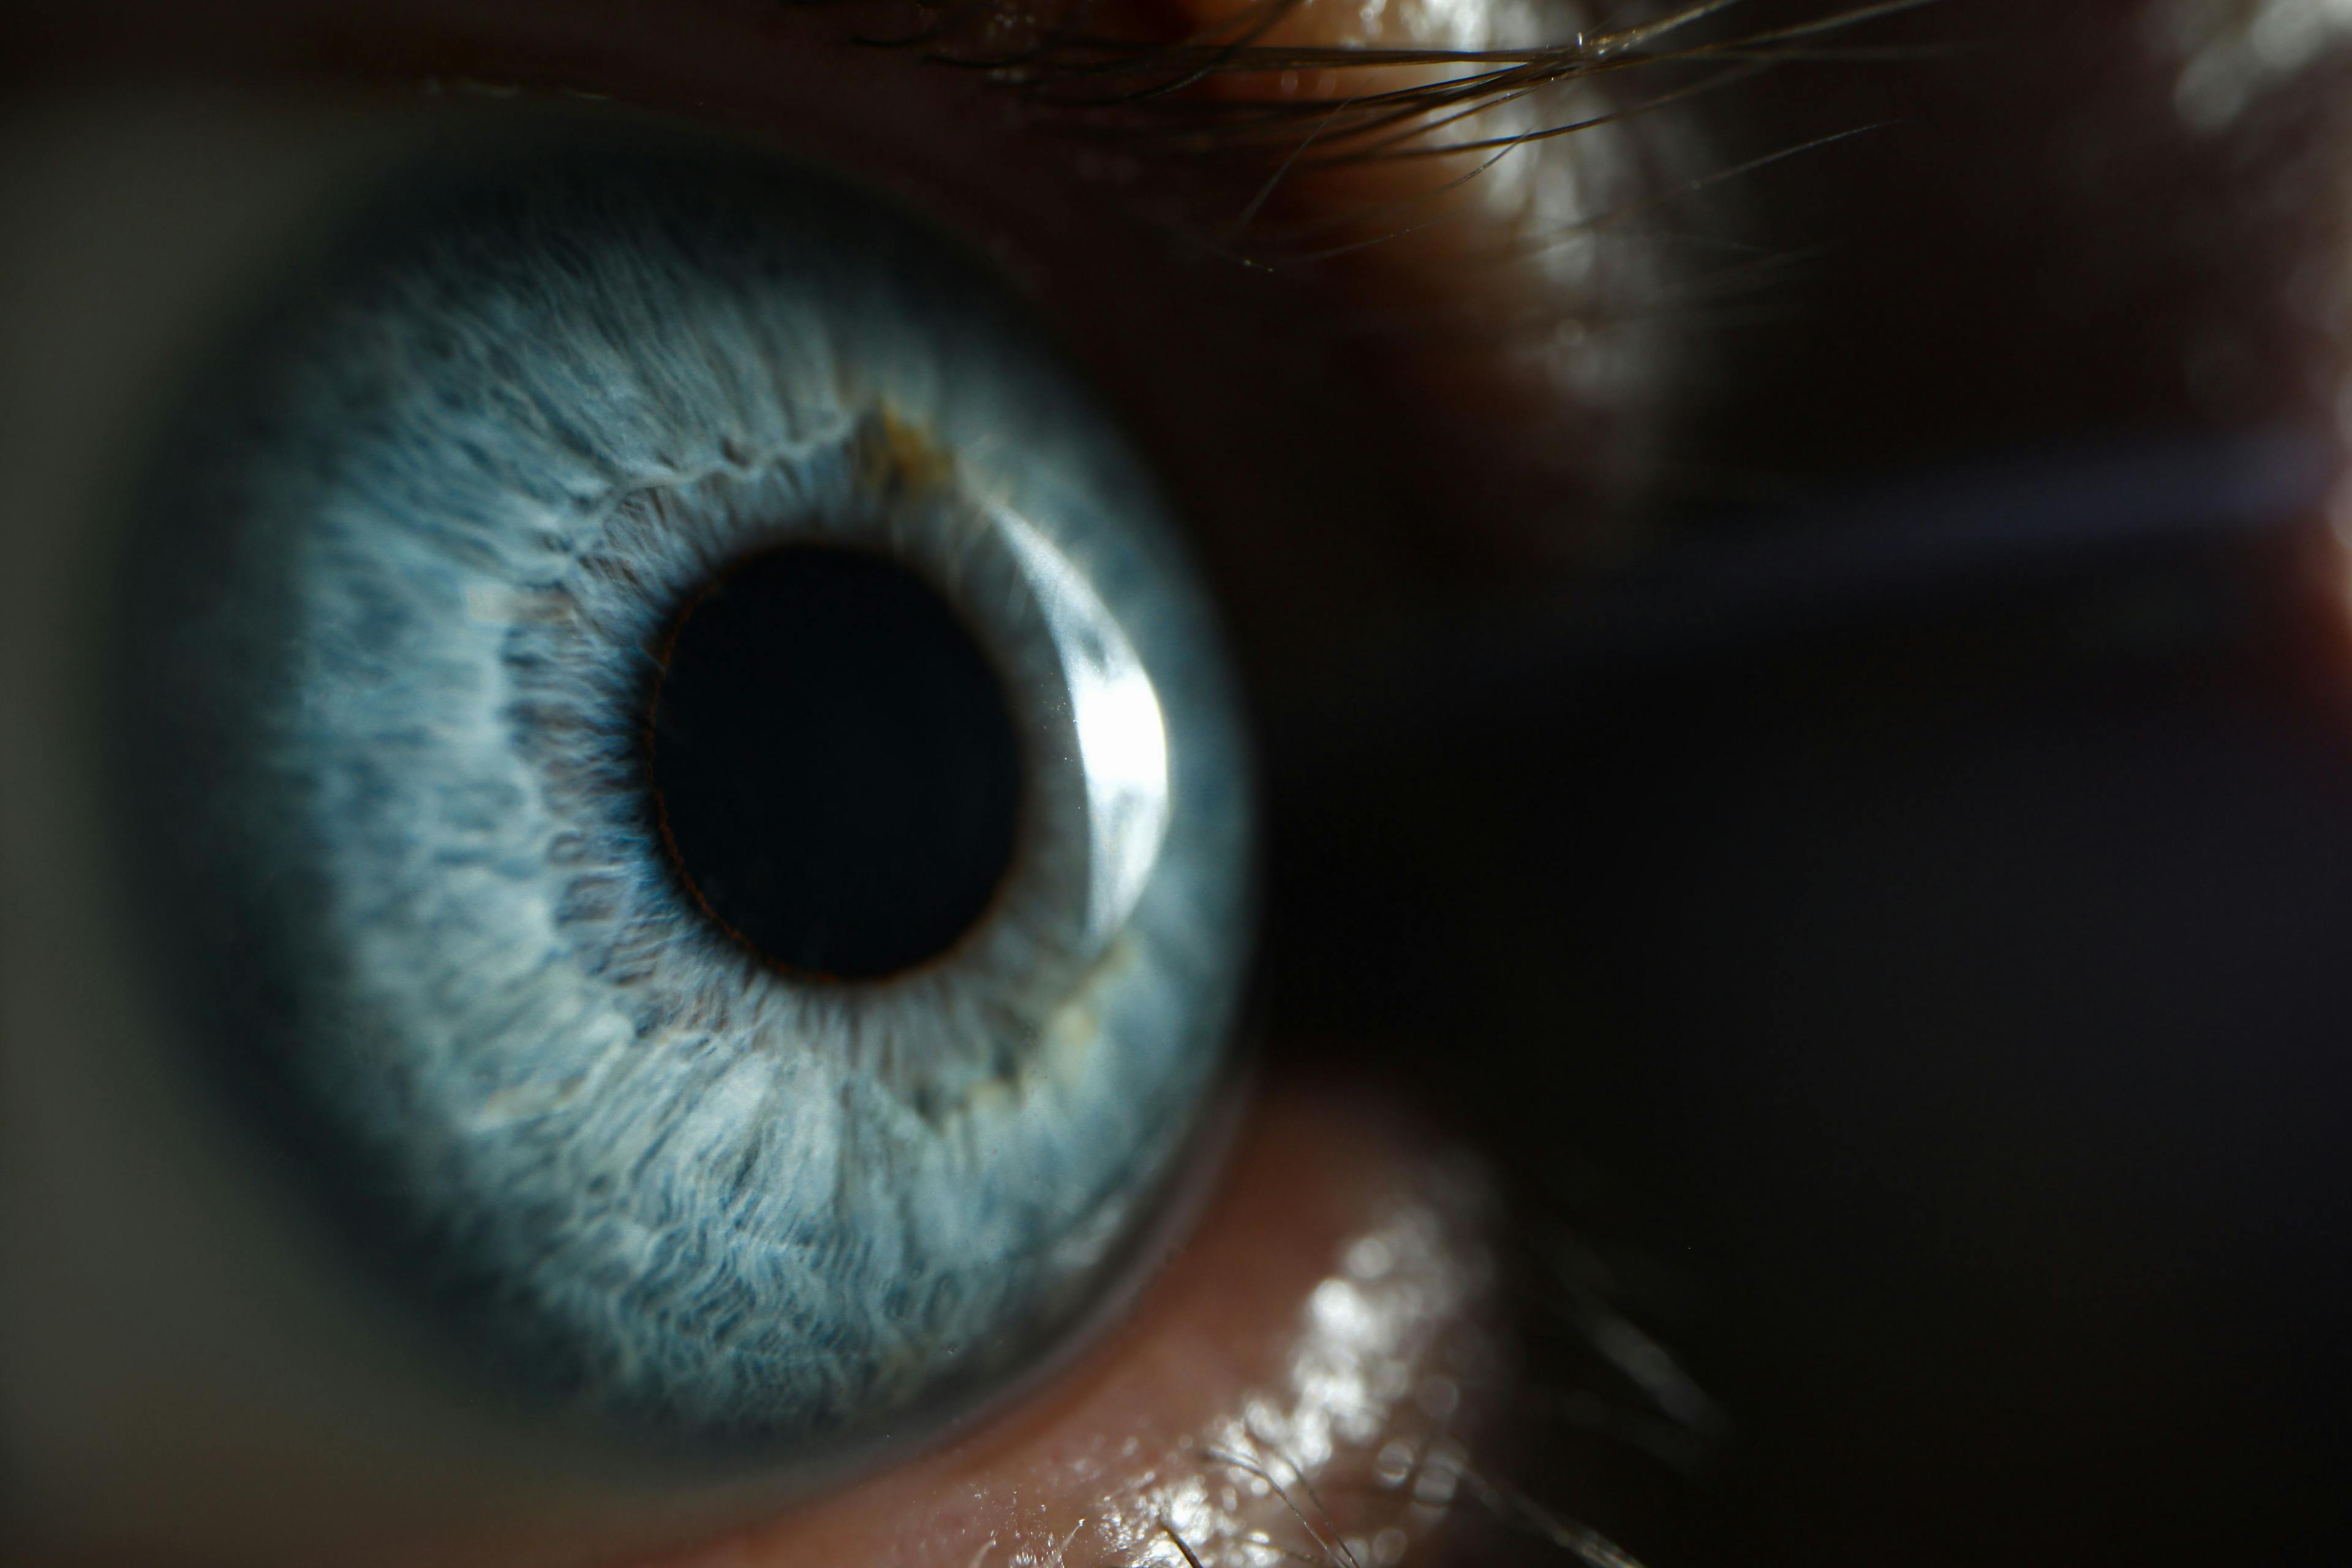 retina, glaucoma disease monitoring